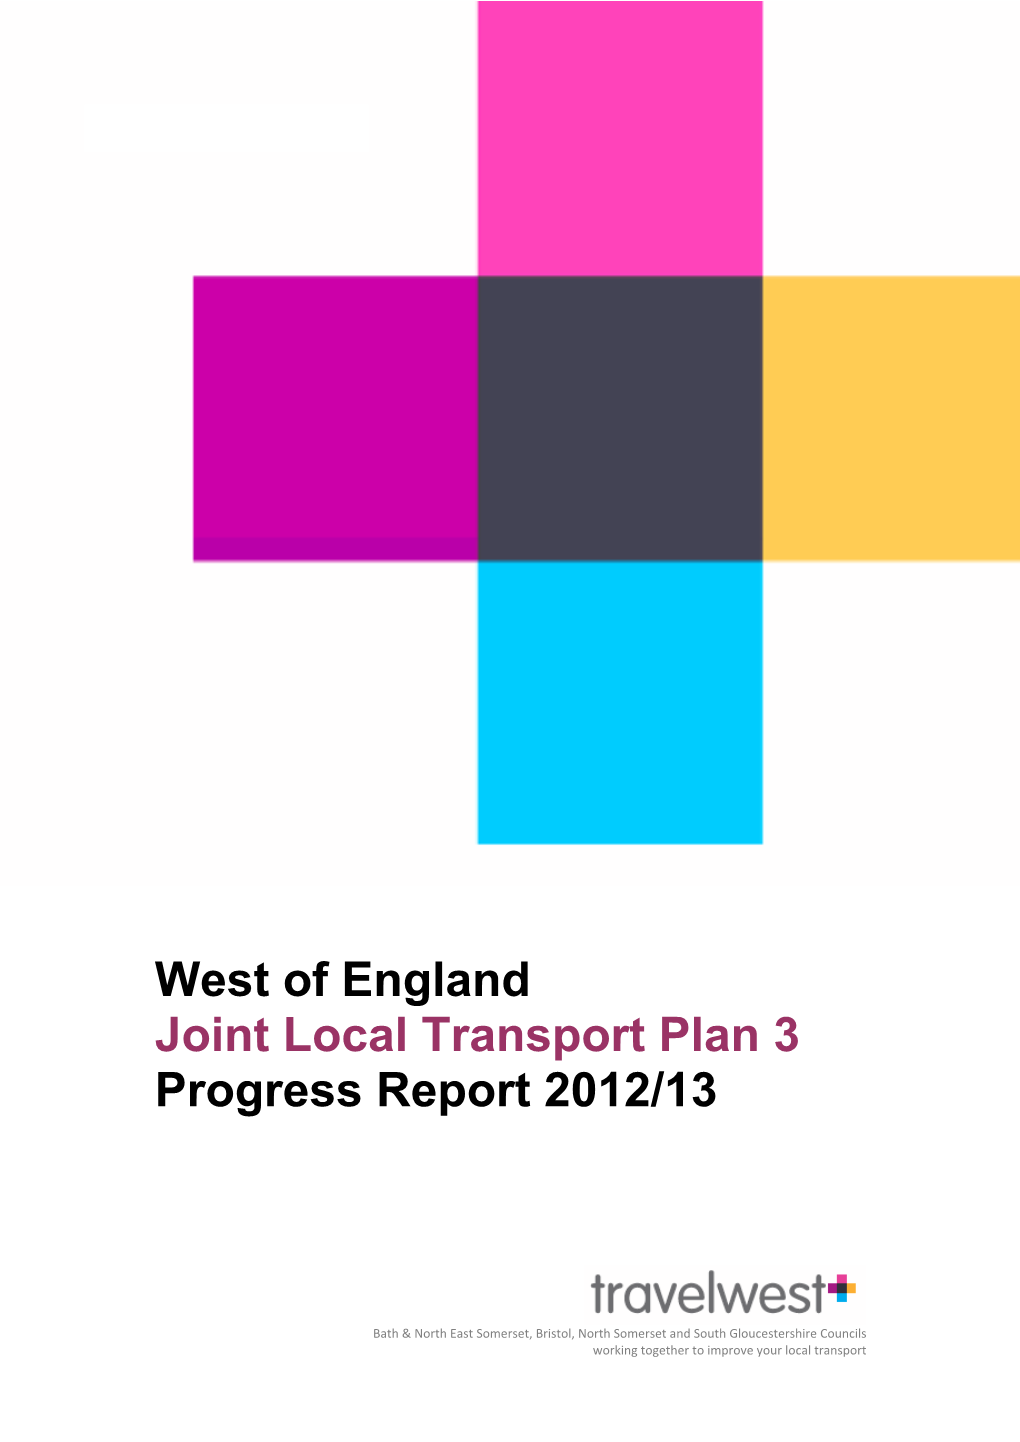 JLTP 3 Progress Report 2013 Download